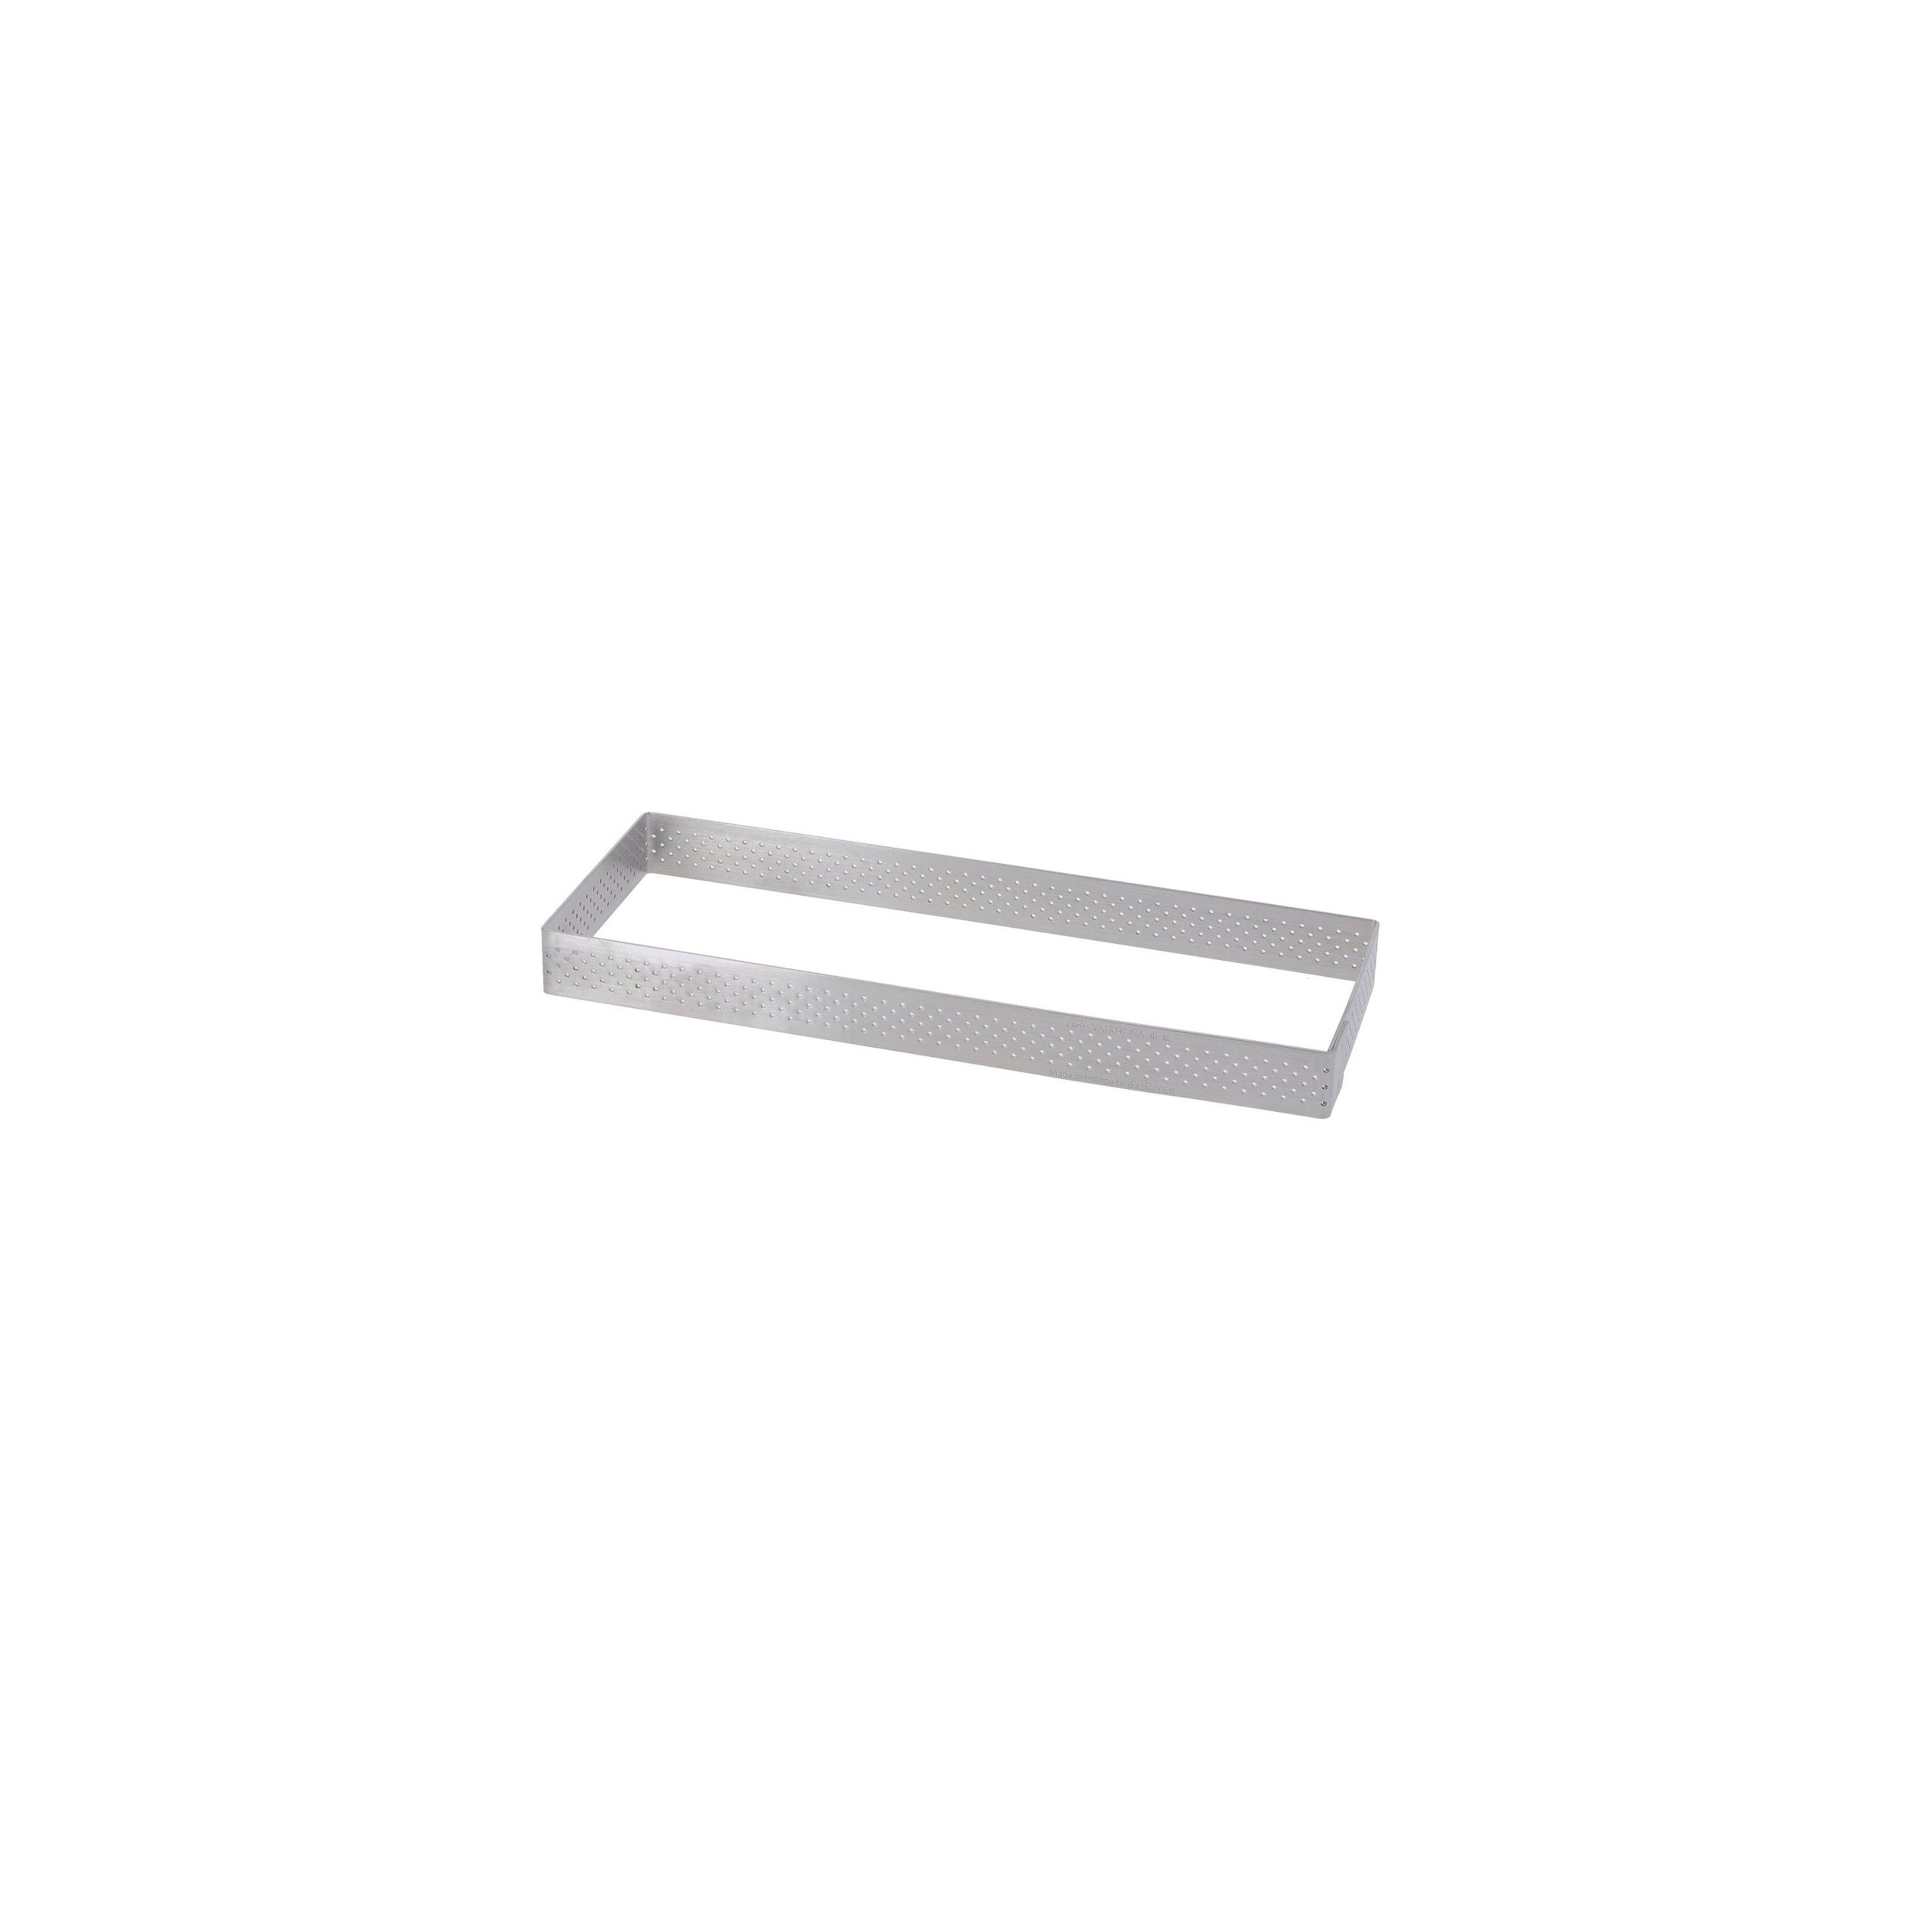 DE BUYER S/S Perforated Rectangular Tart Ring, 4.7